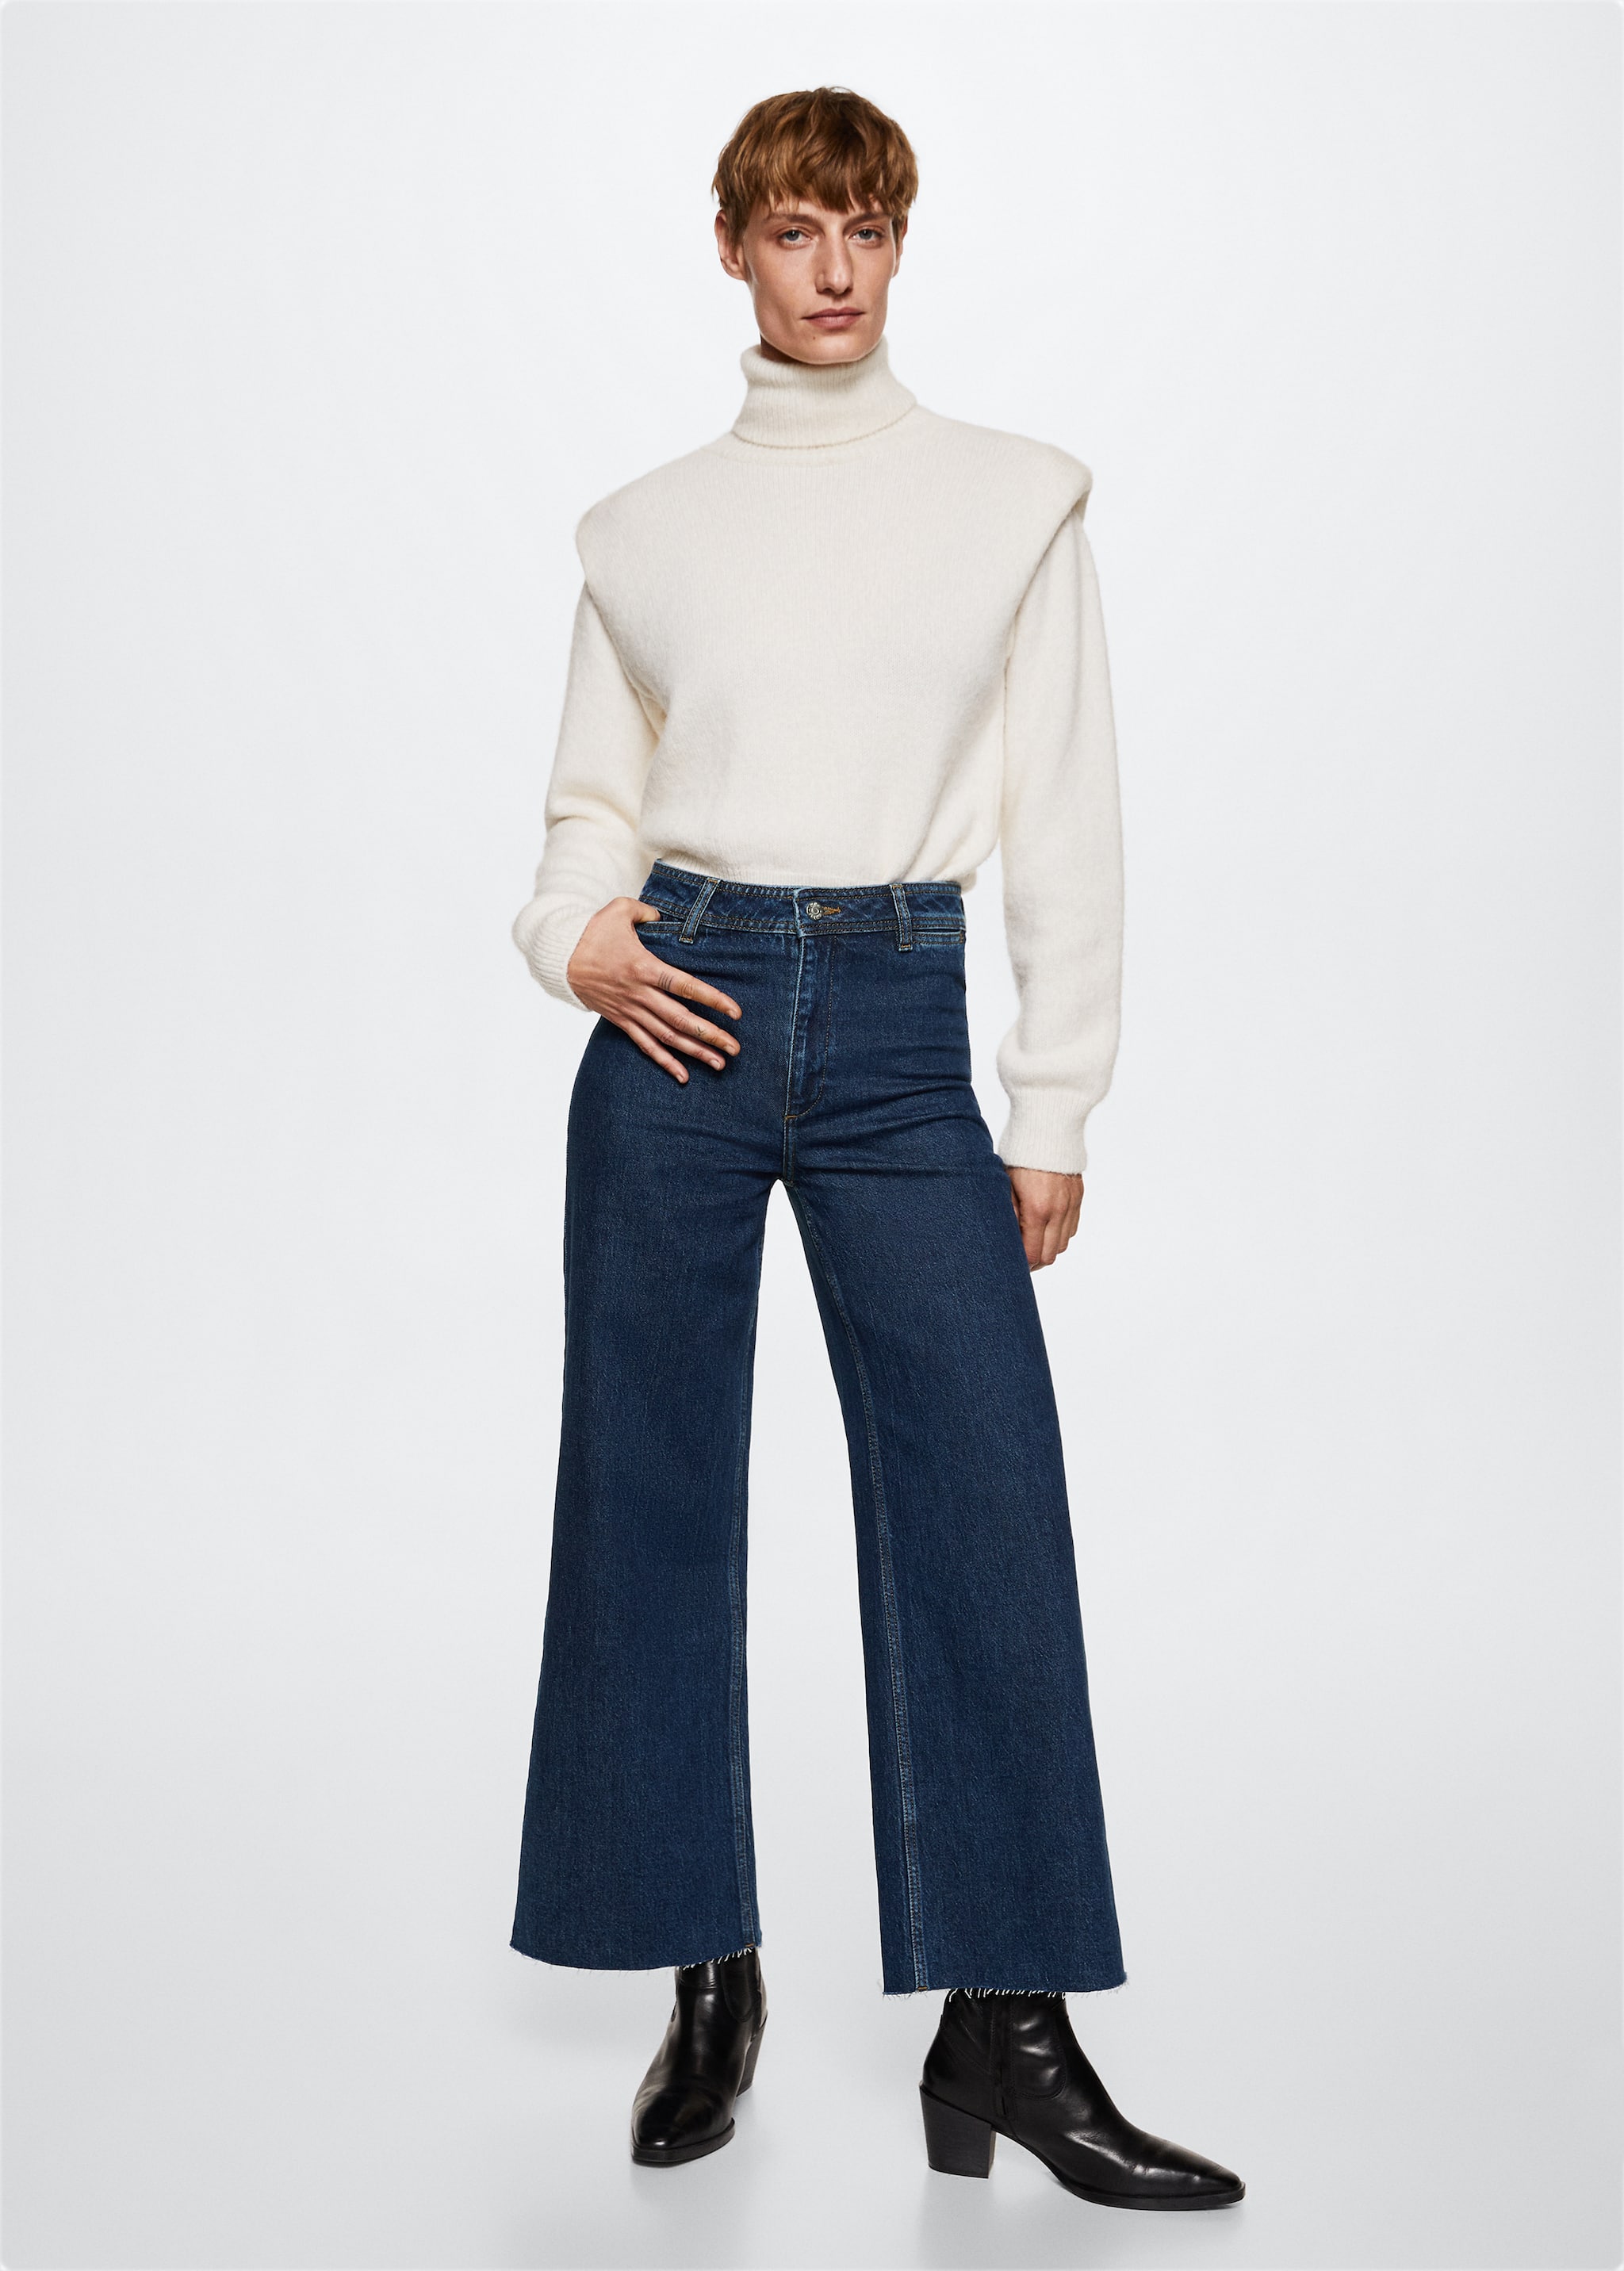 Jeans culotte high waist - General plane